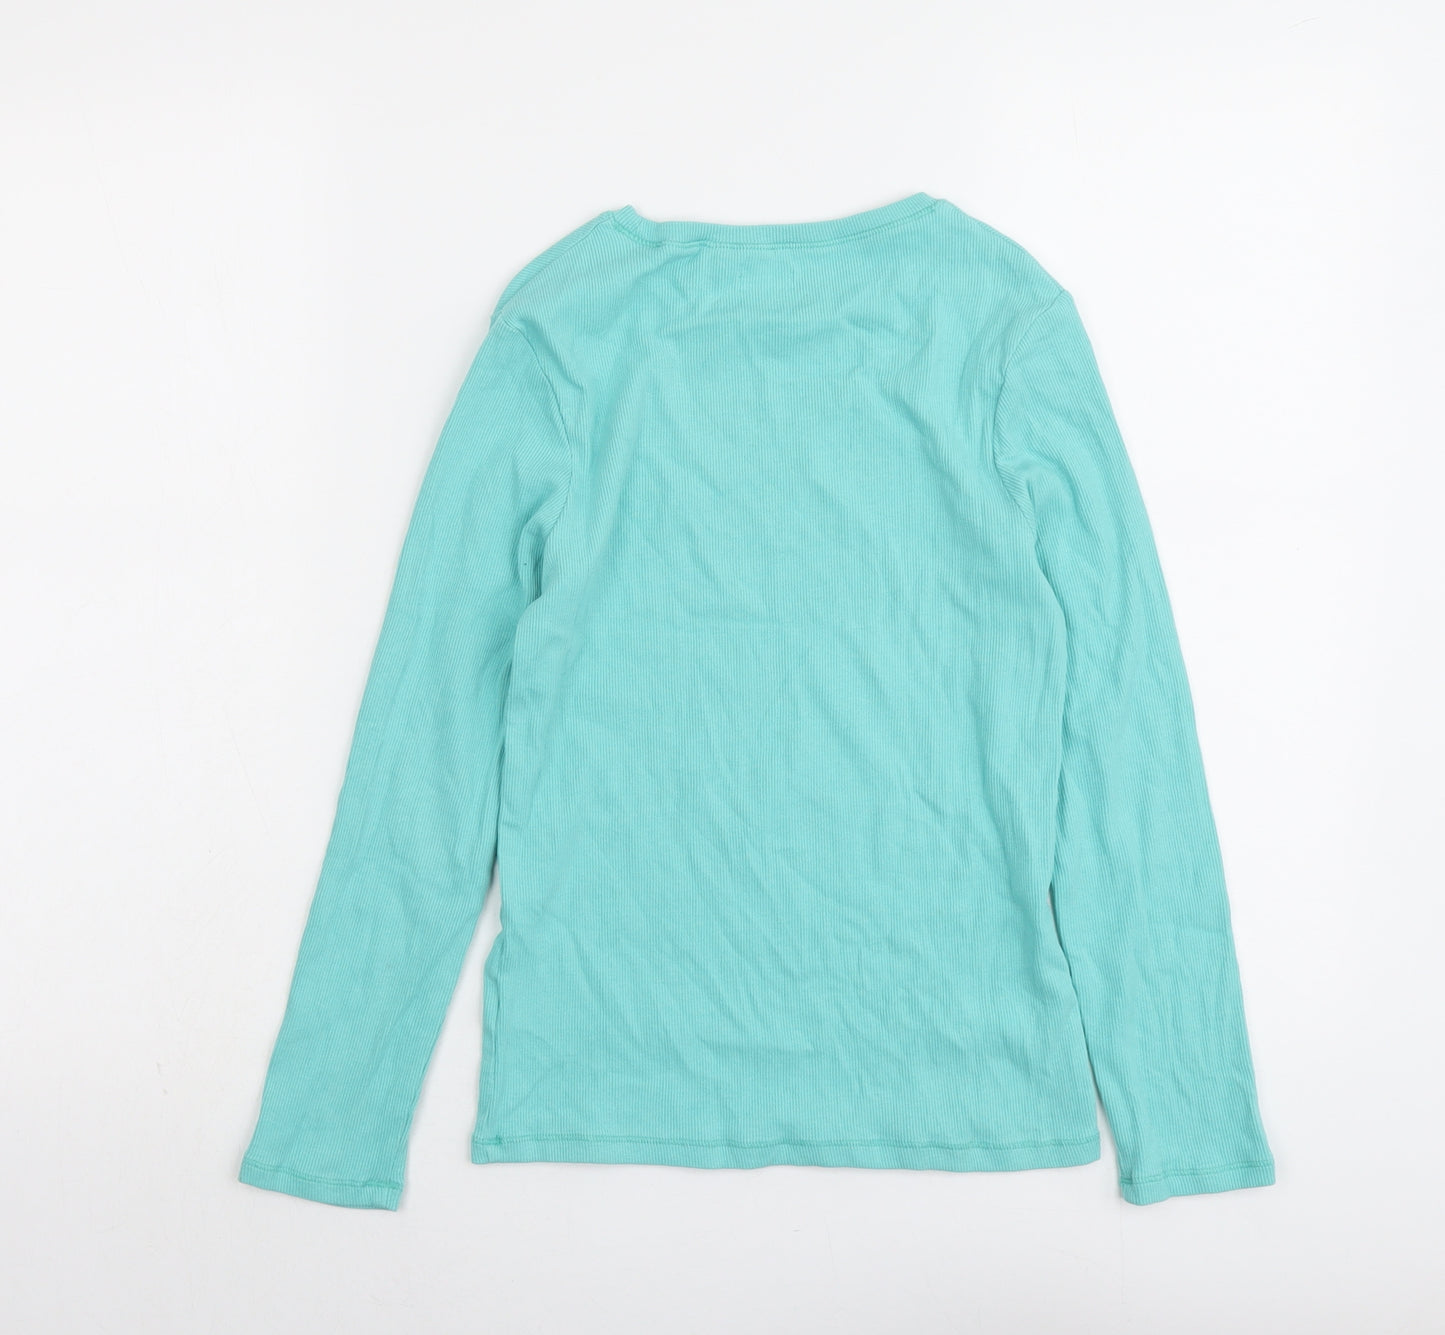 NEXT Girls Green Cotton Basic T-Shirt Size 12 Years Round Neck Pullover